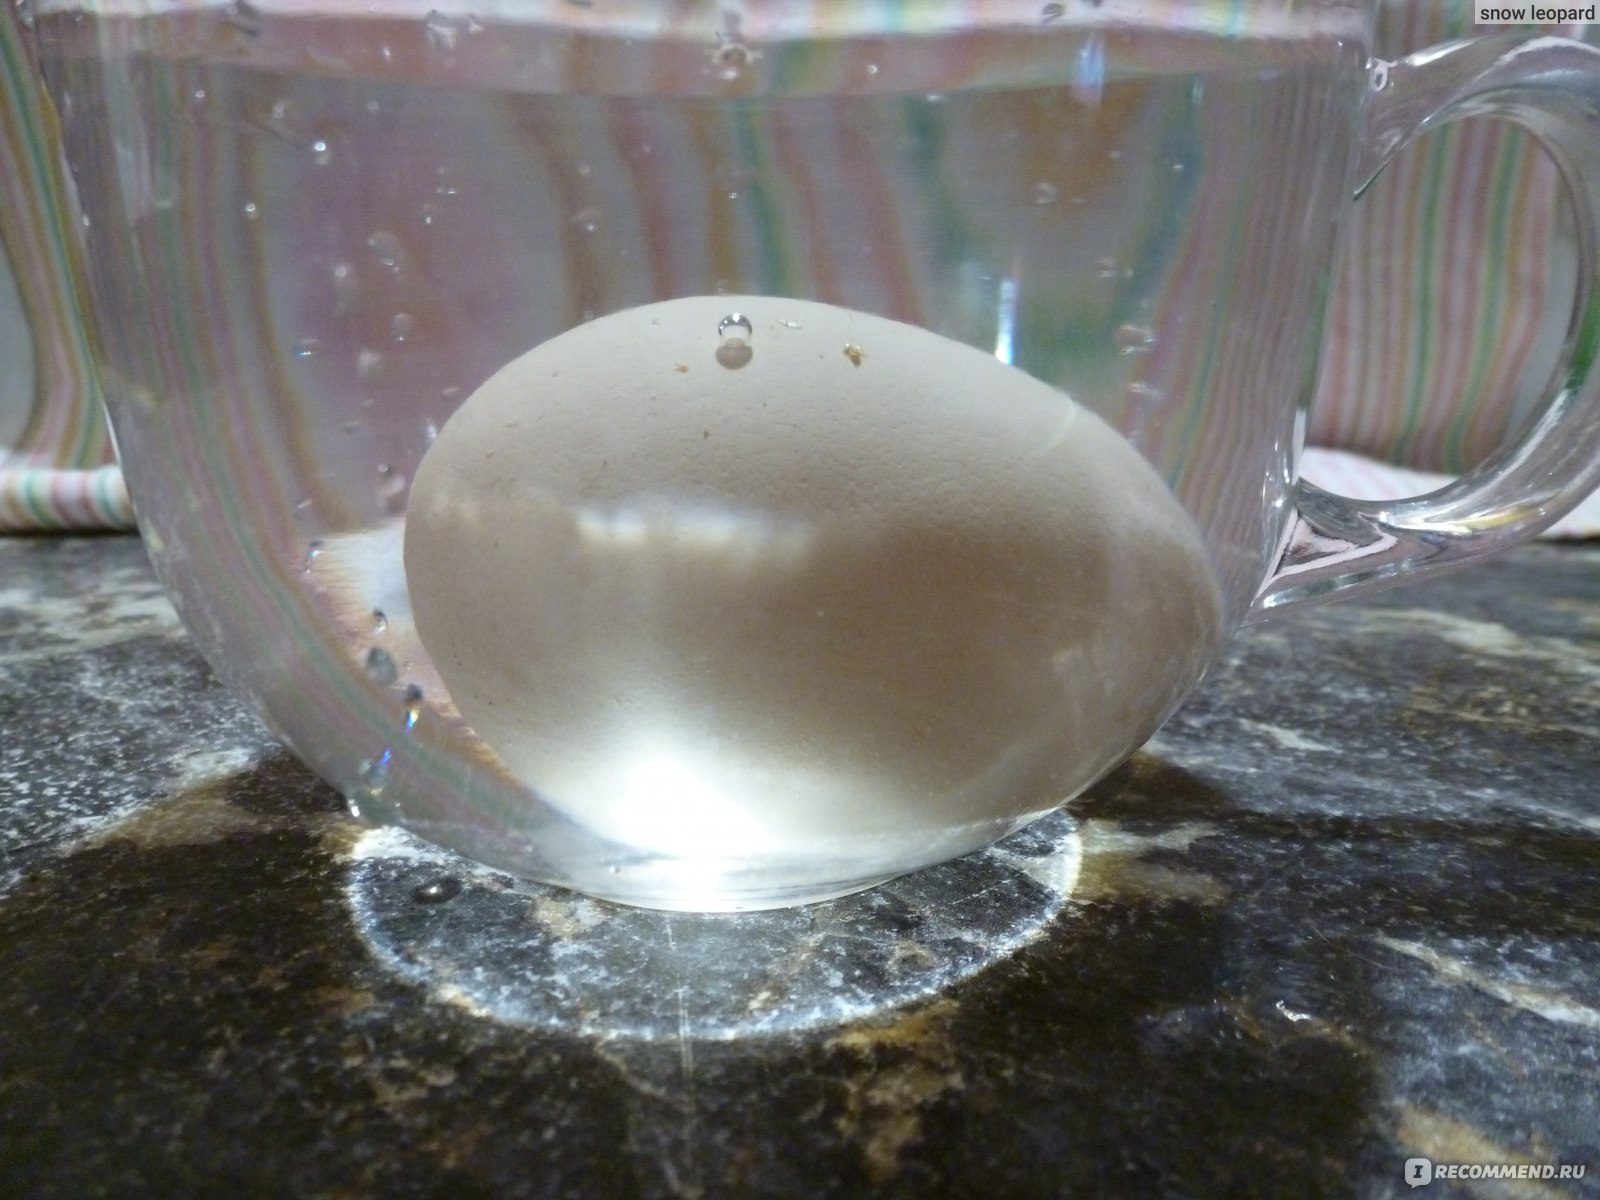 яйцо в стакане с водой фото